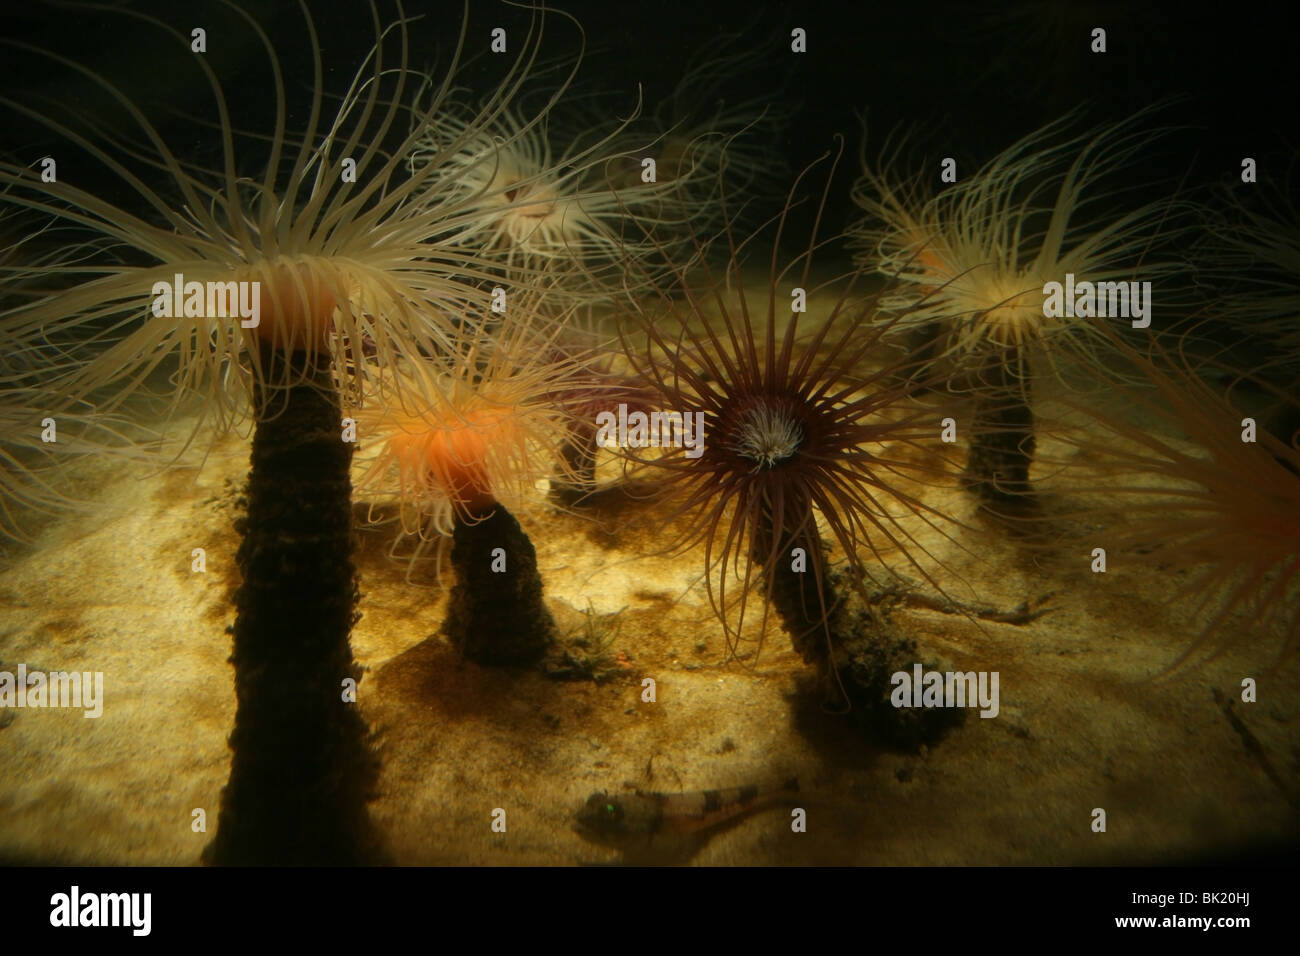 Tube anemone (Anemona tubicola) at the Monterey Bay Aquarium, Monterey, California, CA, USA. Stock Photo